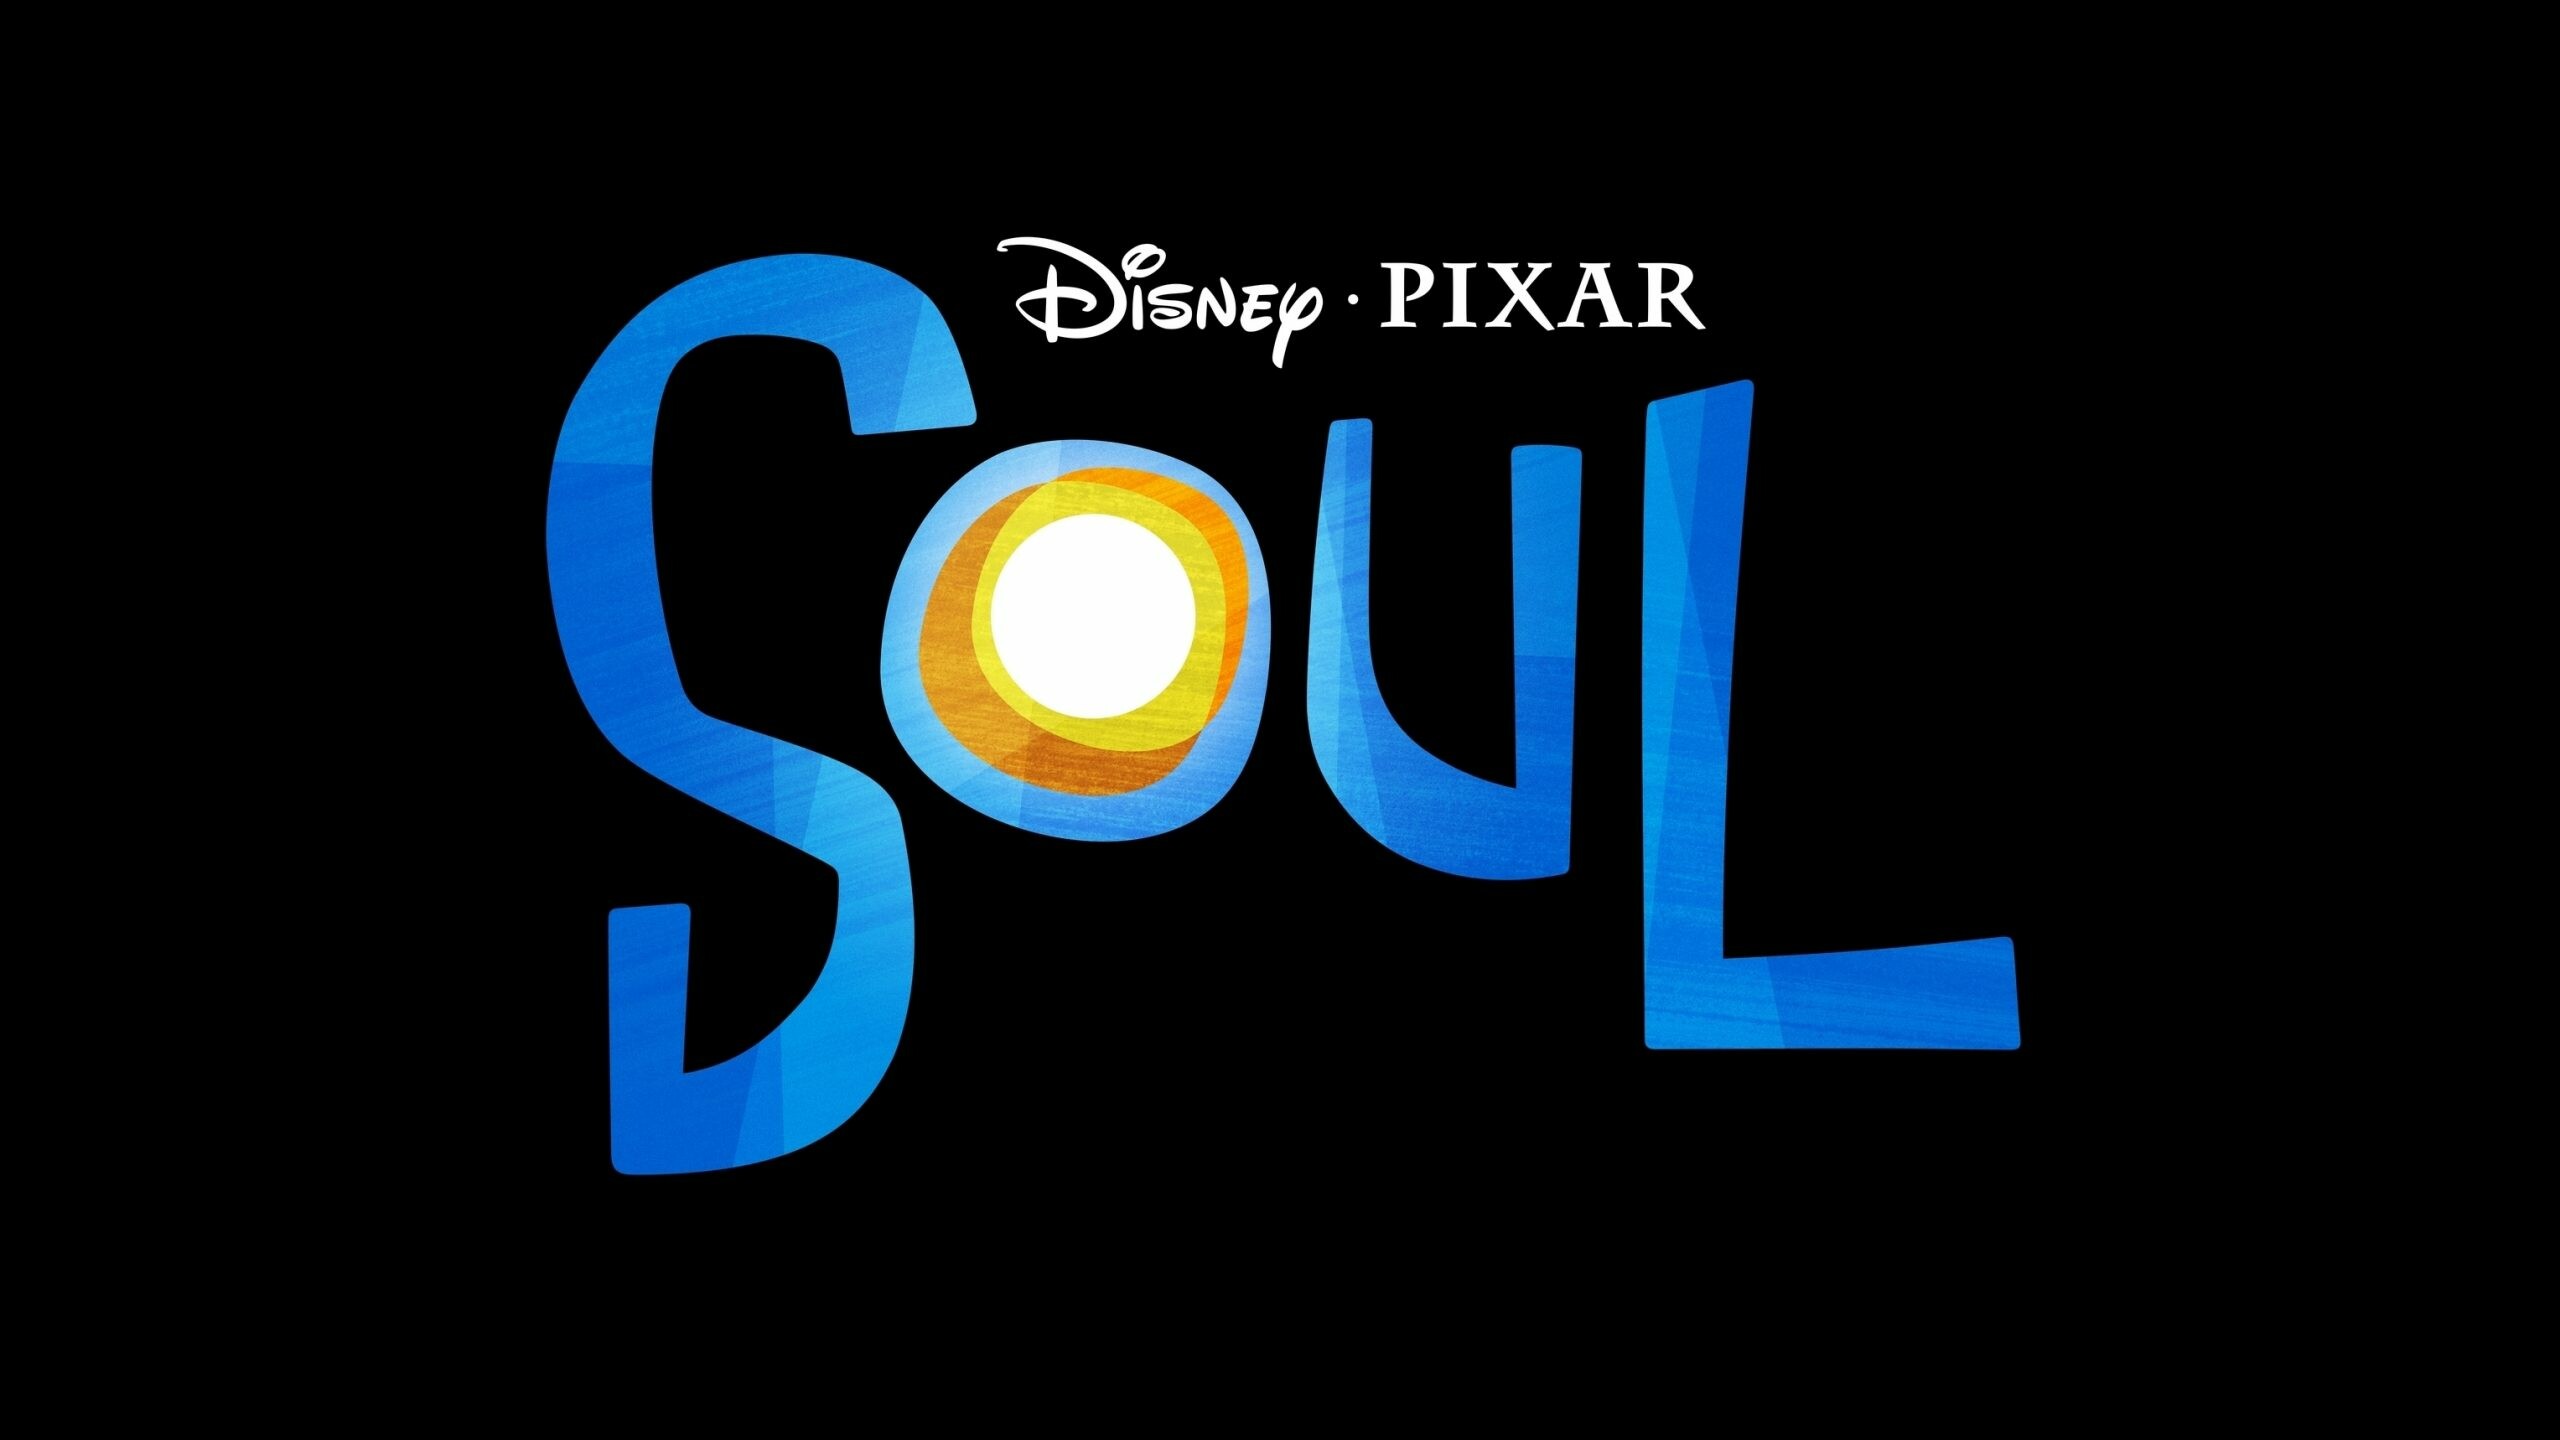 Soul (Pixar): Disney, The first Pixar film to feature a black lead, Cartoon. 2560x1440 HD Wallpaper.